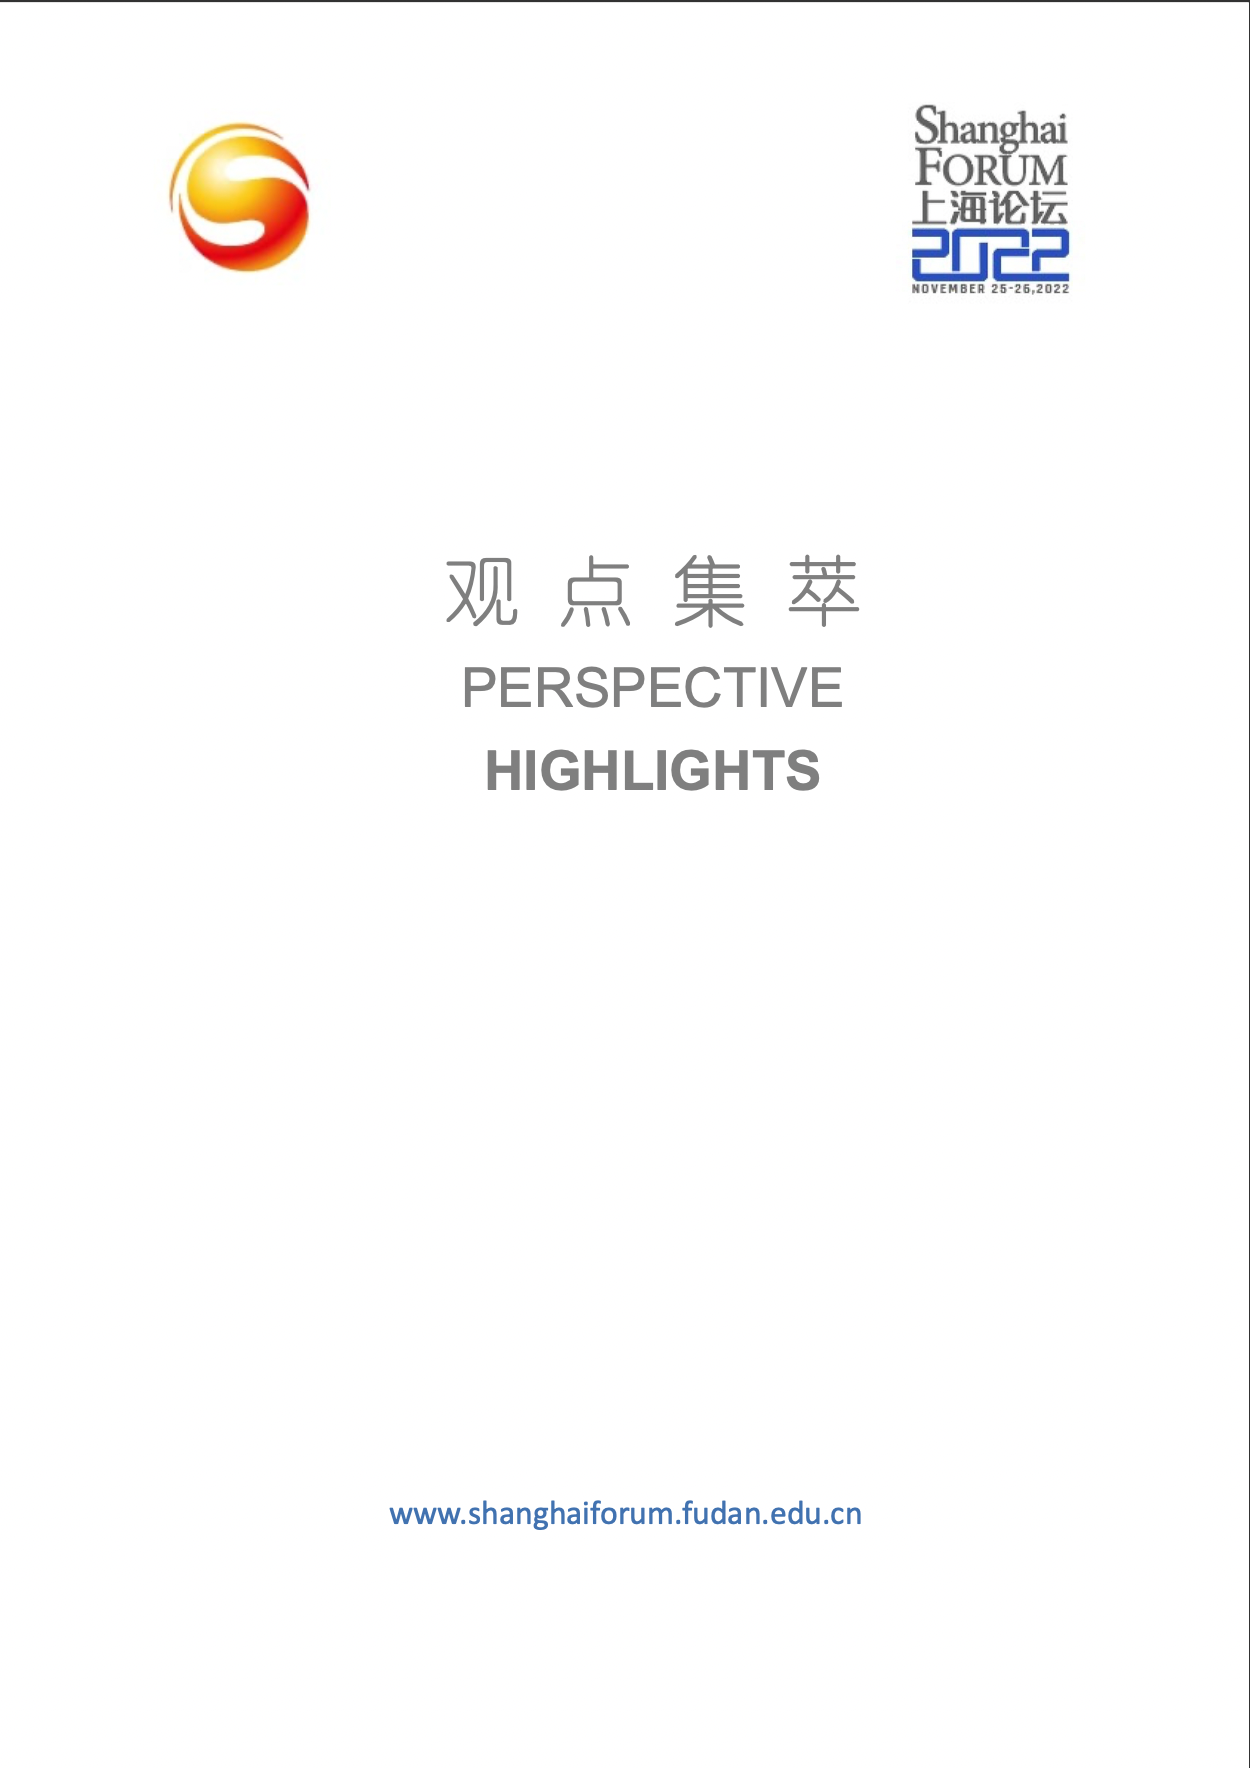 Shanghai Forum 2022 Perspective Highlights